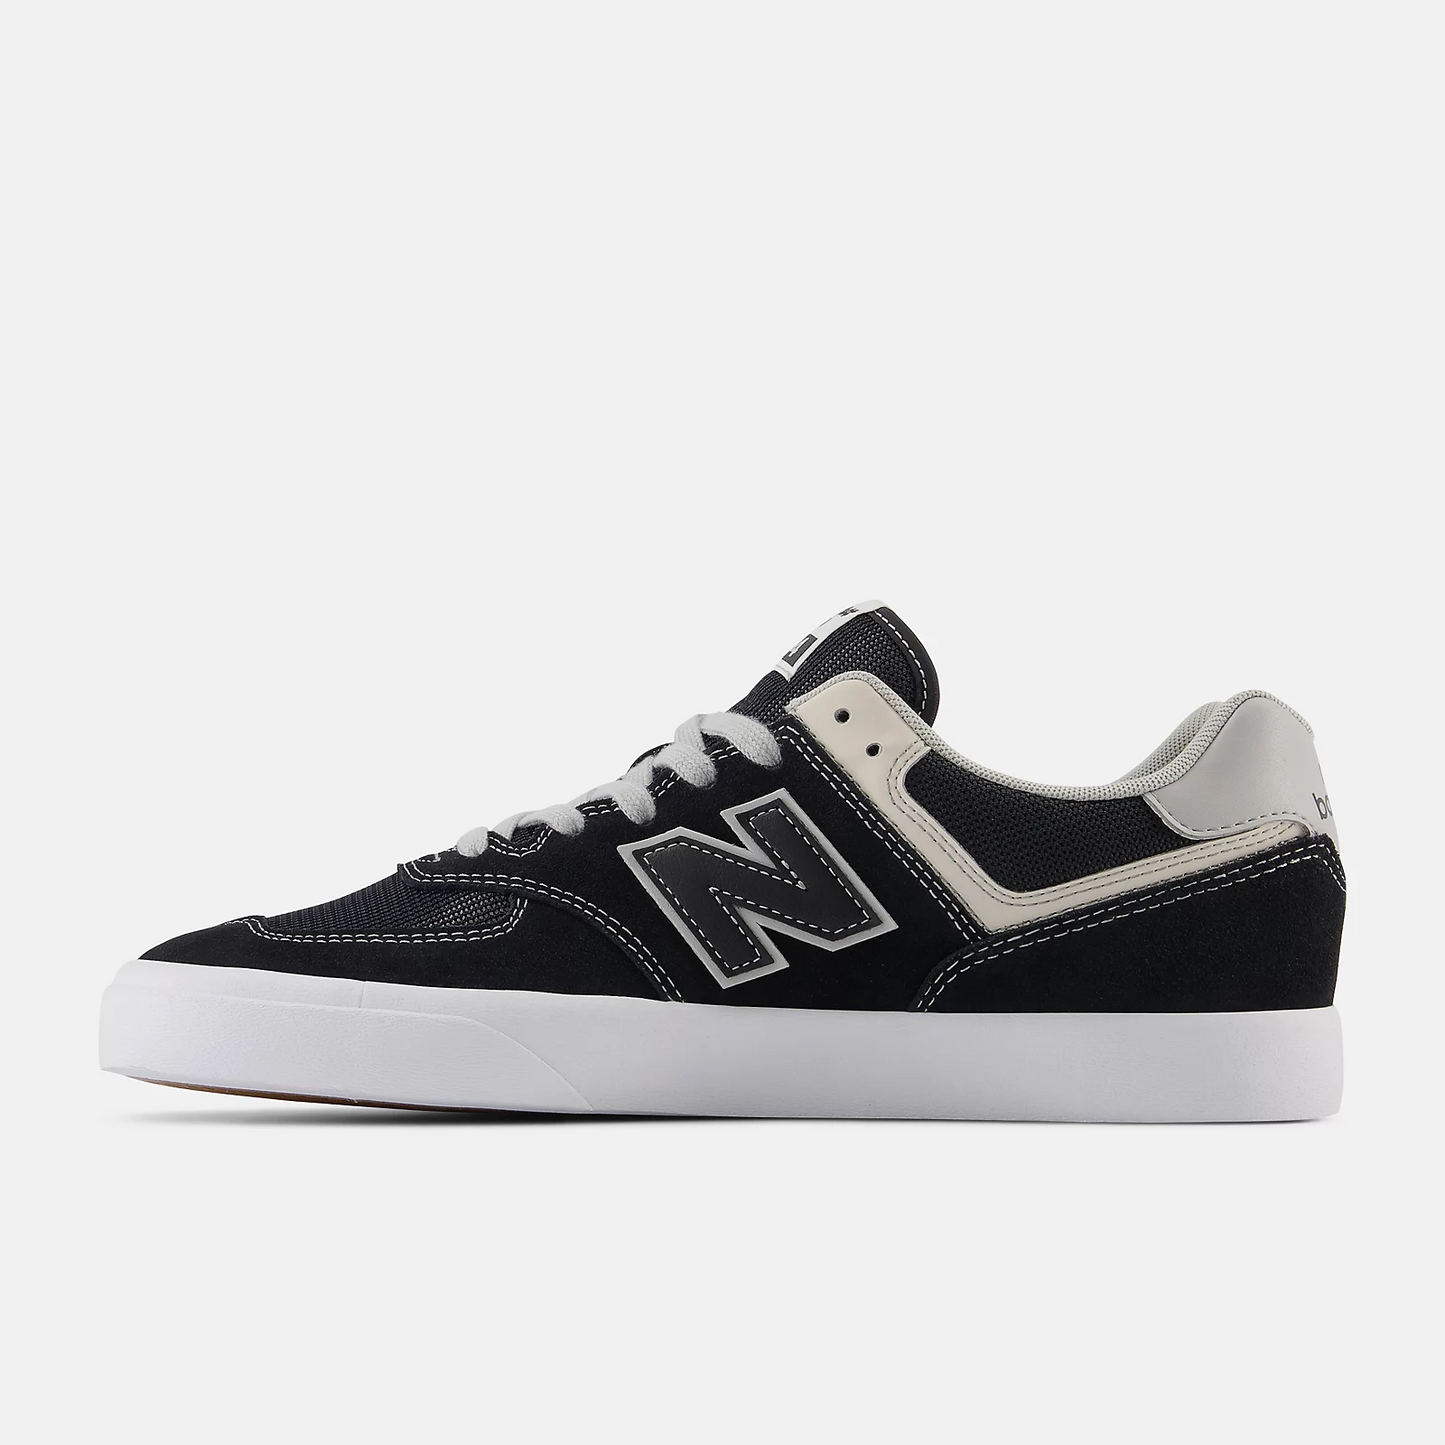 NB Numeric 574 Shoes